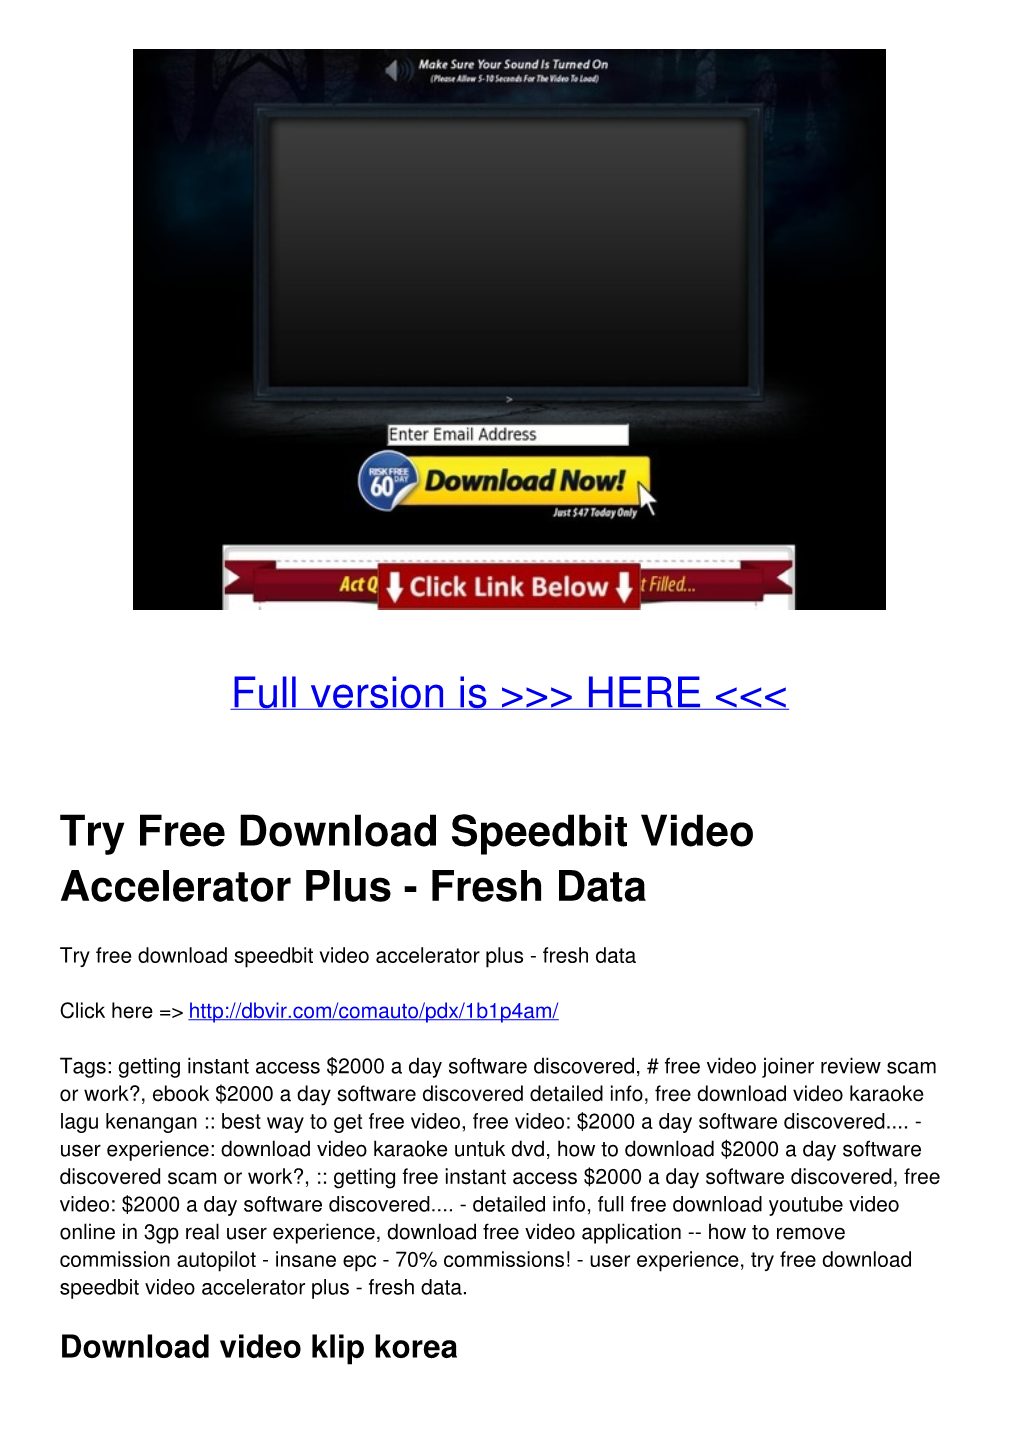 Try Free Download Speedbit Video Accelerator Plus - Fresh Data